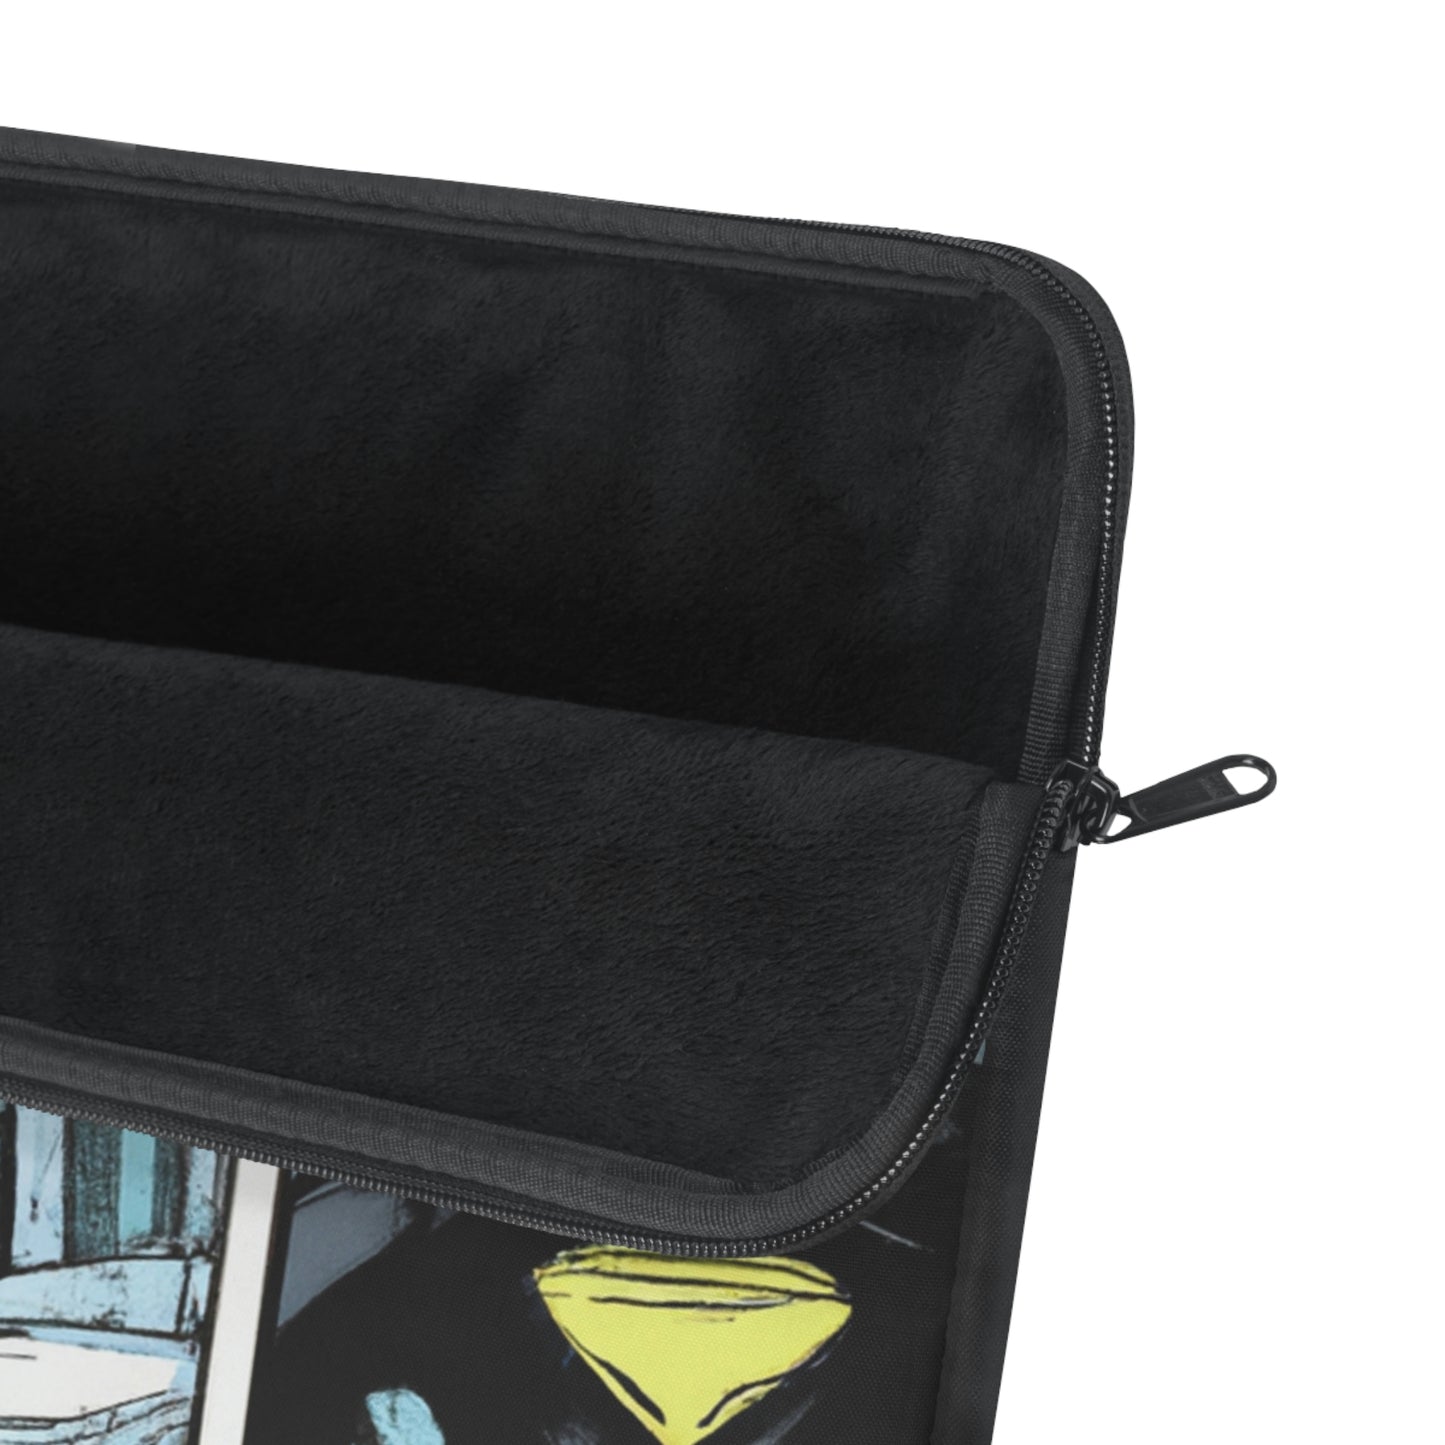 Mack McStinger - Comic Book Collector Laptop Computer Sleeve Storage Case Bag